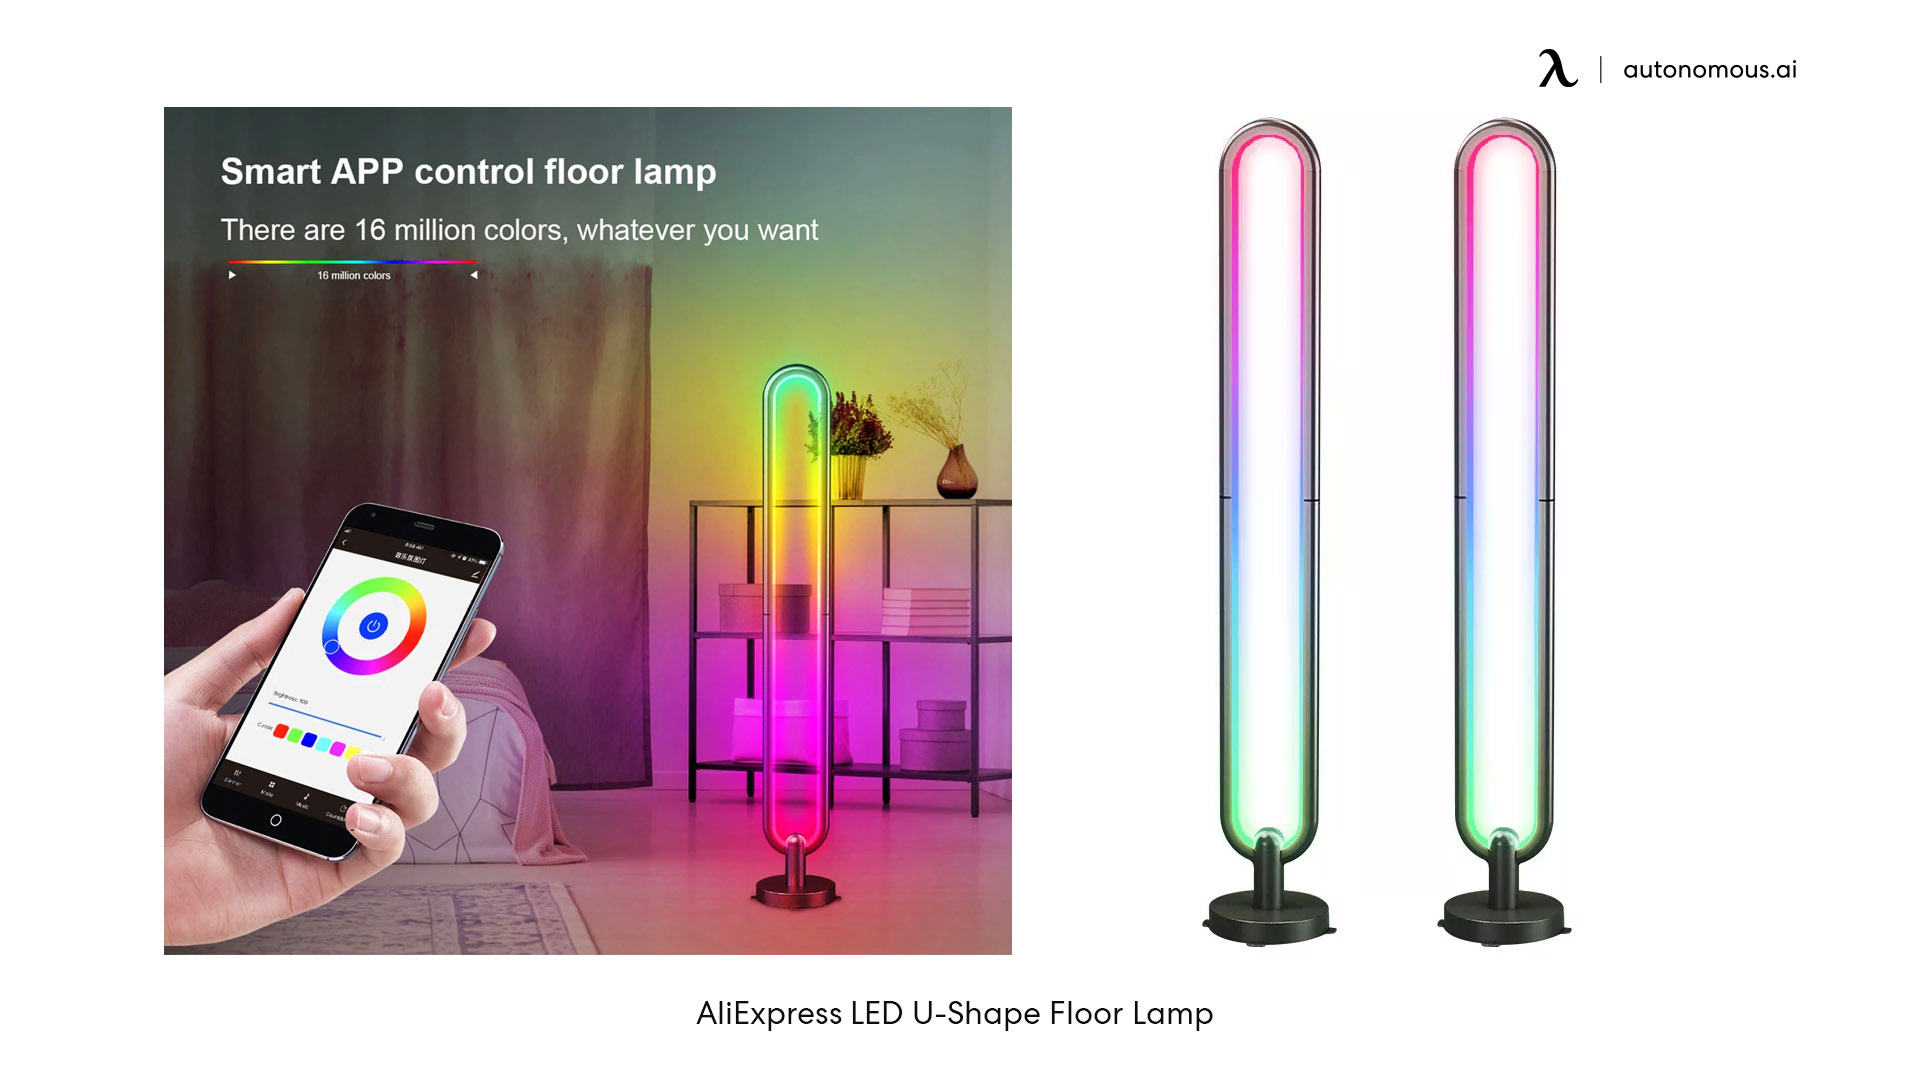 AliExpress LED U-Shape Floor Lamp